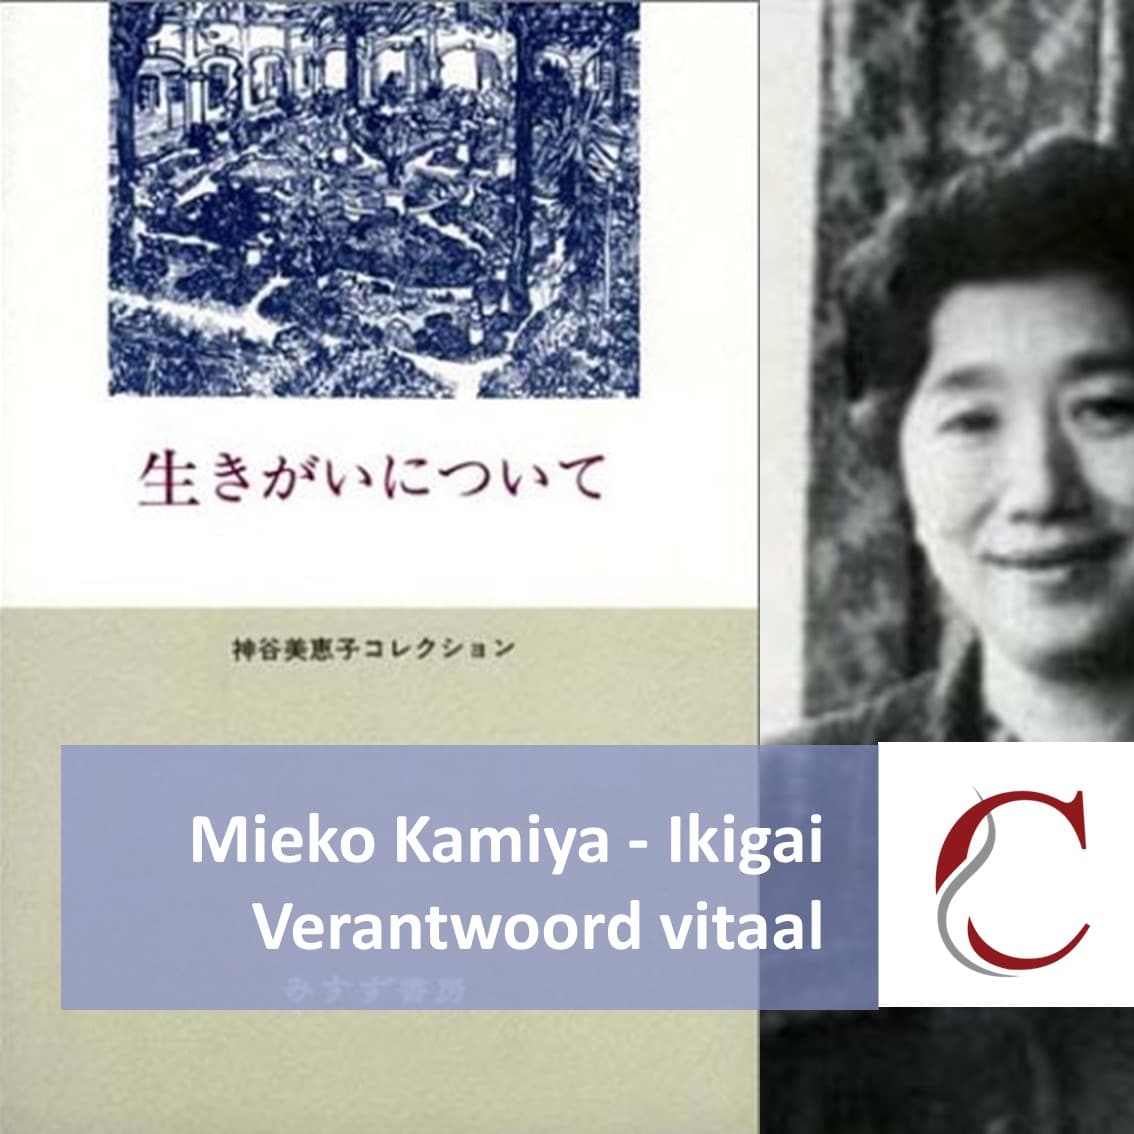 Mieko Kamiya de moeder van Ikigai